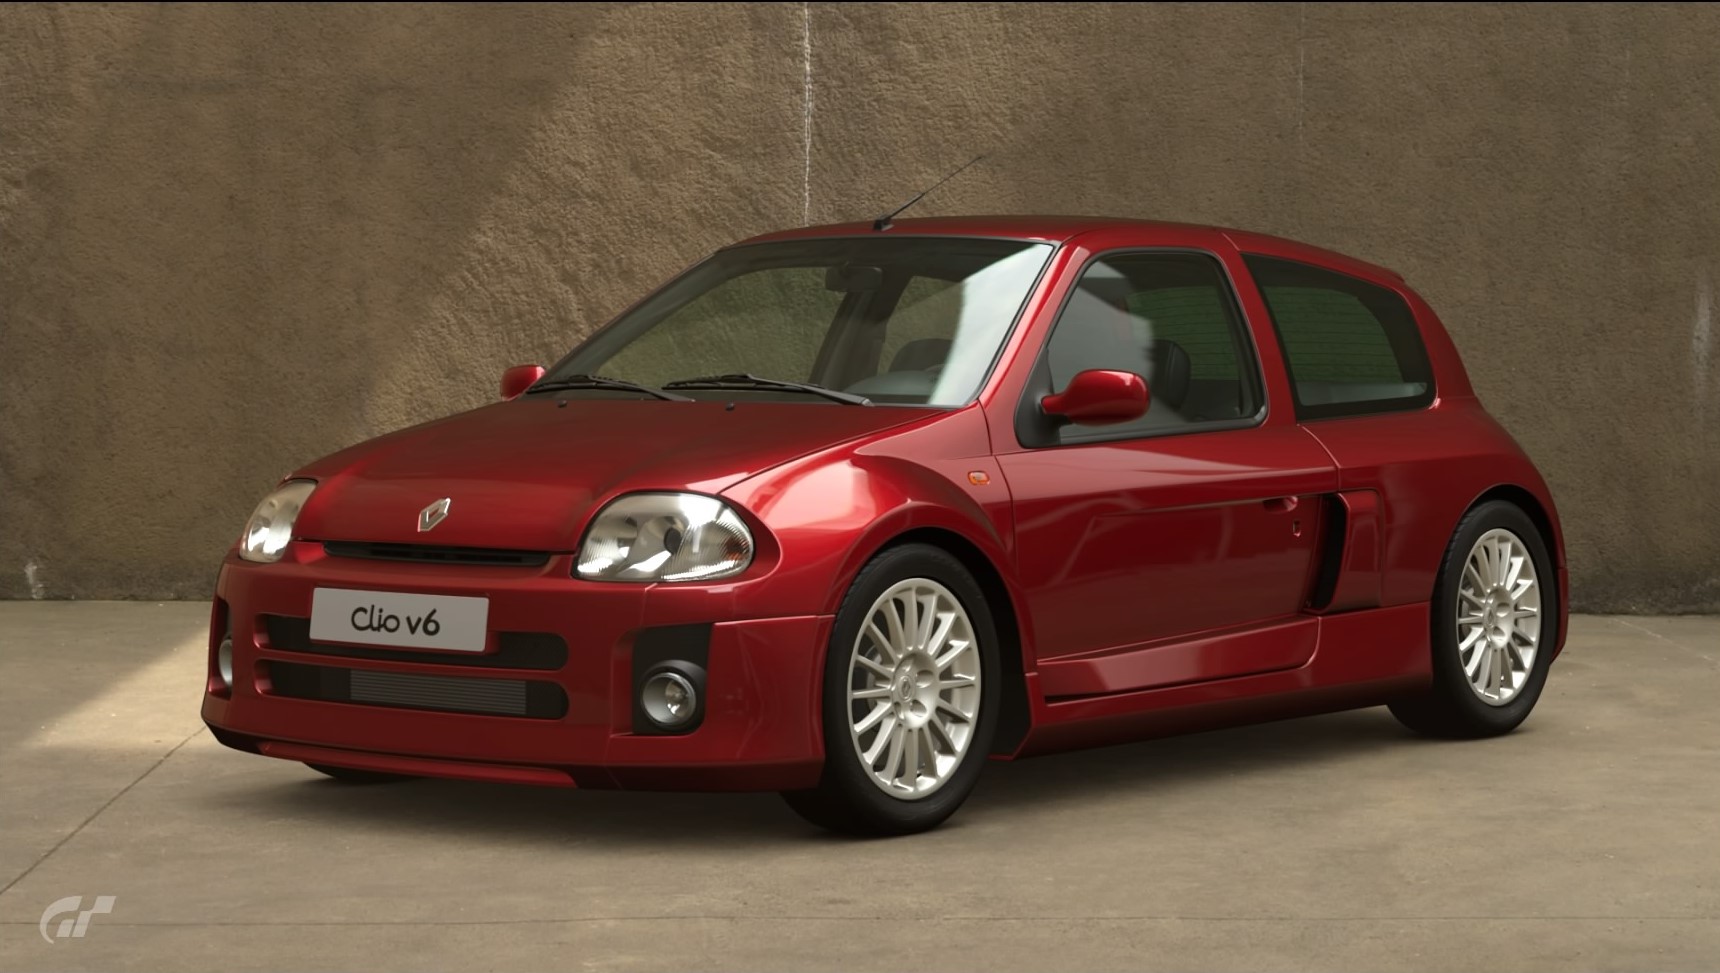 Clio Renault Sport - Wikipedia